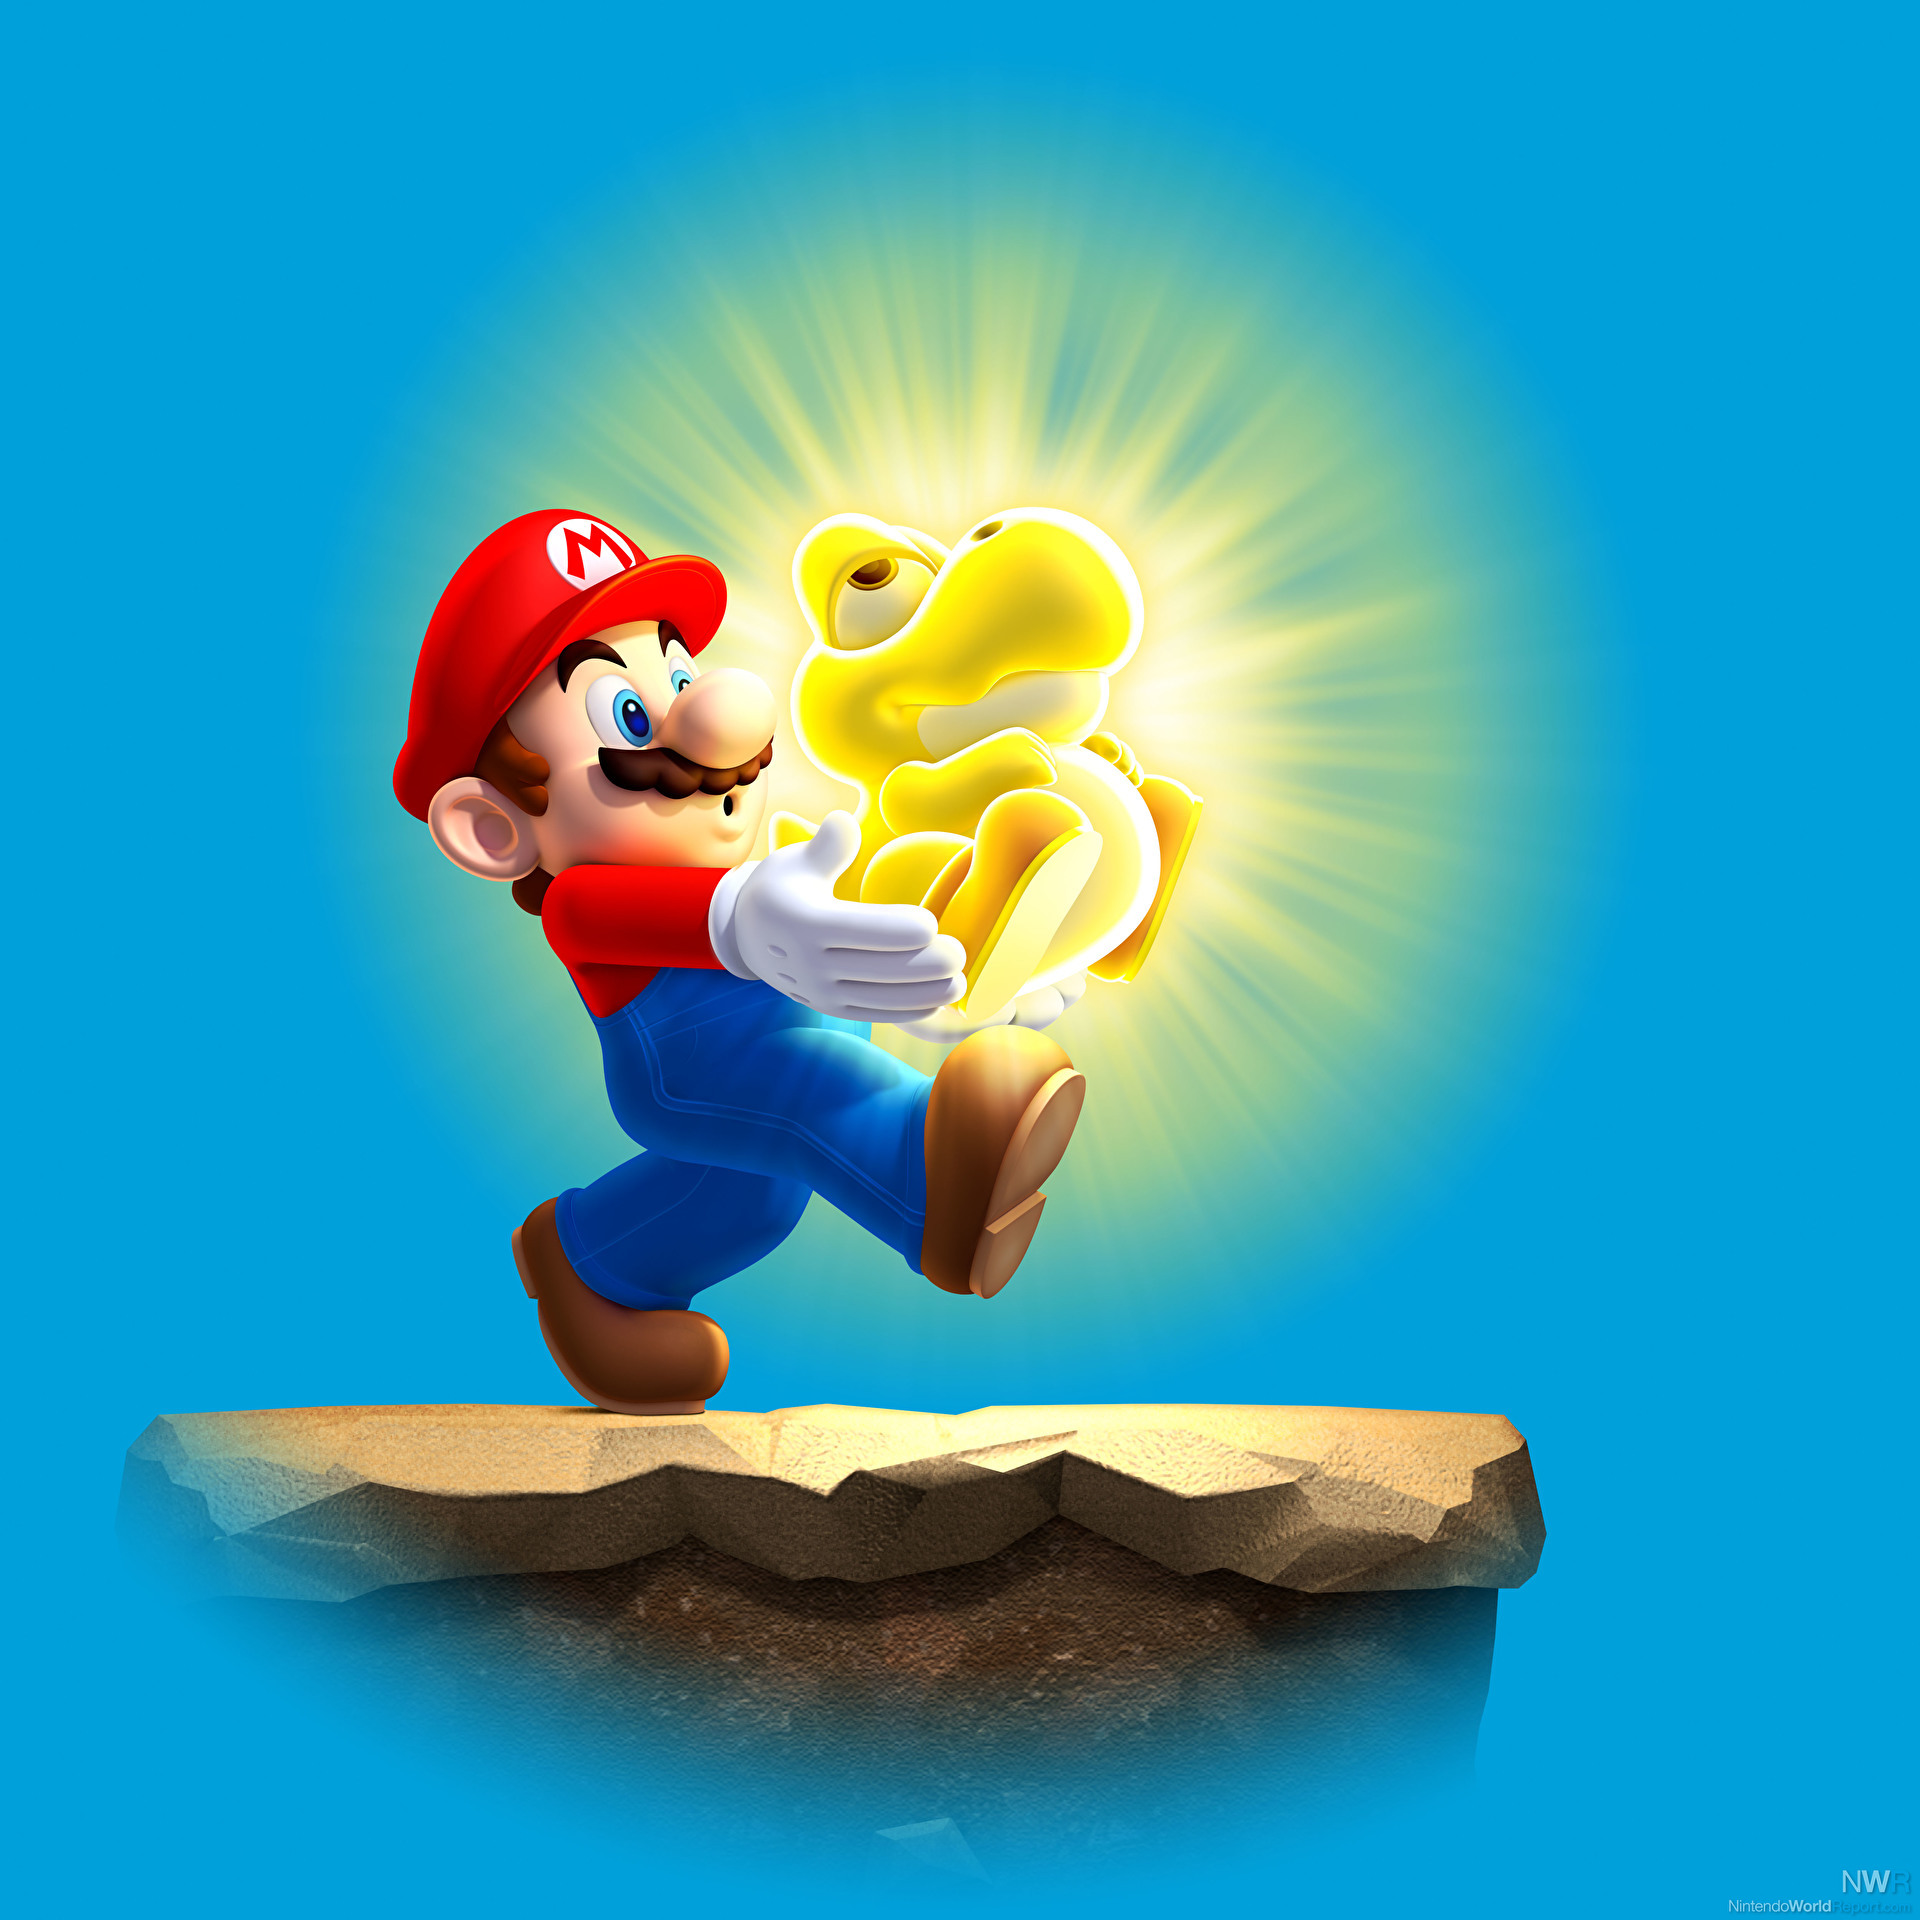 Wii U Pro Controller Support Coming to New Super Mario Bros. U - News -  Nintendo World Report